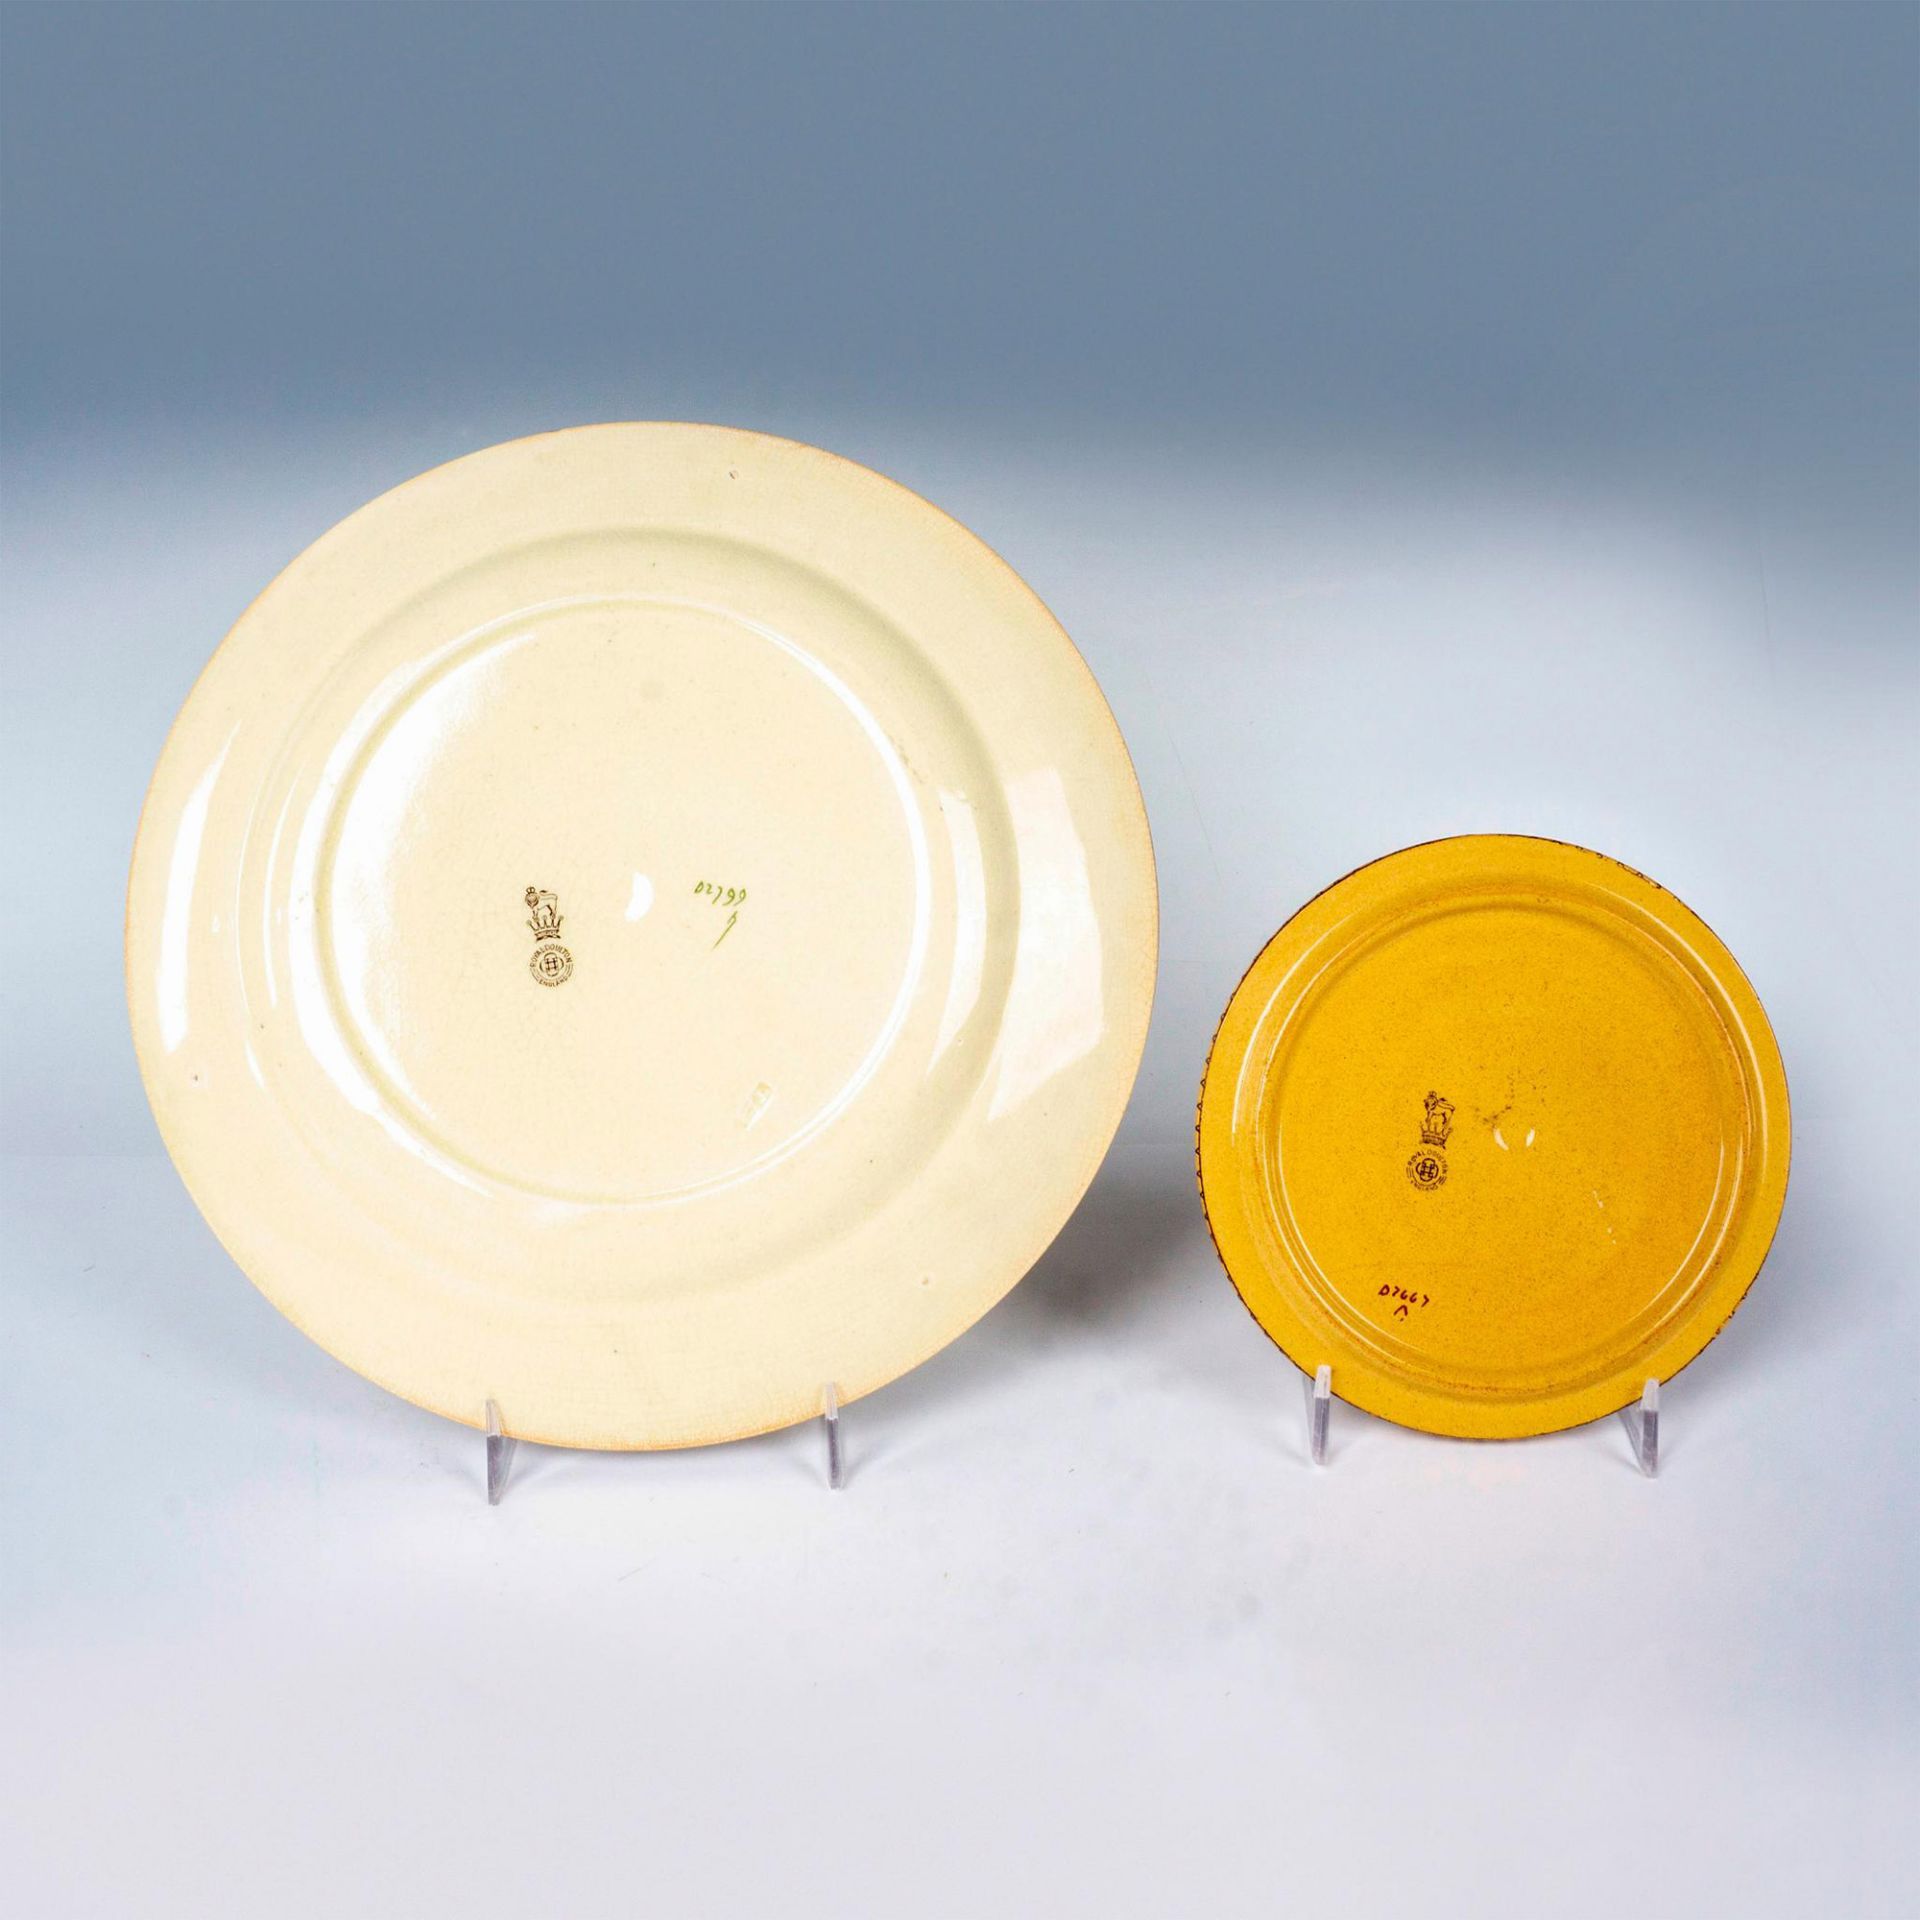 2pc Royal Doulton Porcelain Trivet and Plate, Teatime - Image 2 of 2